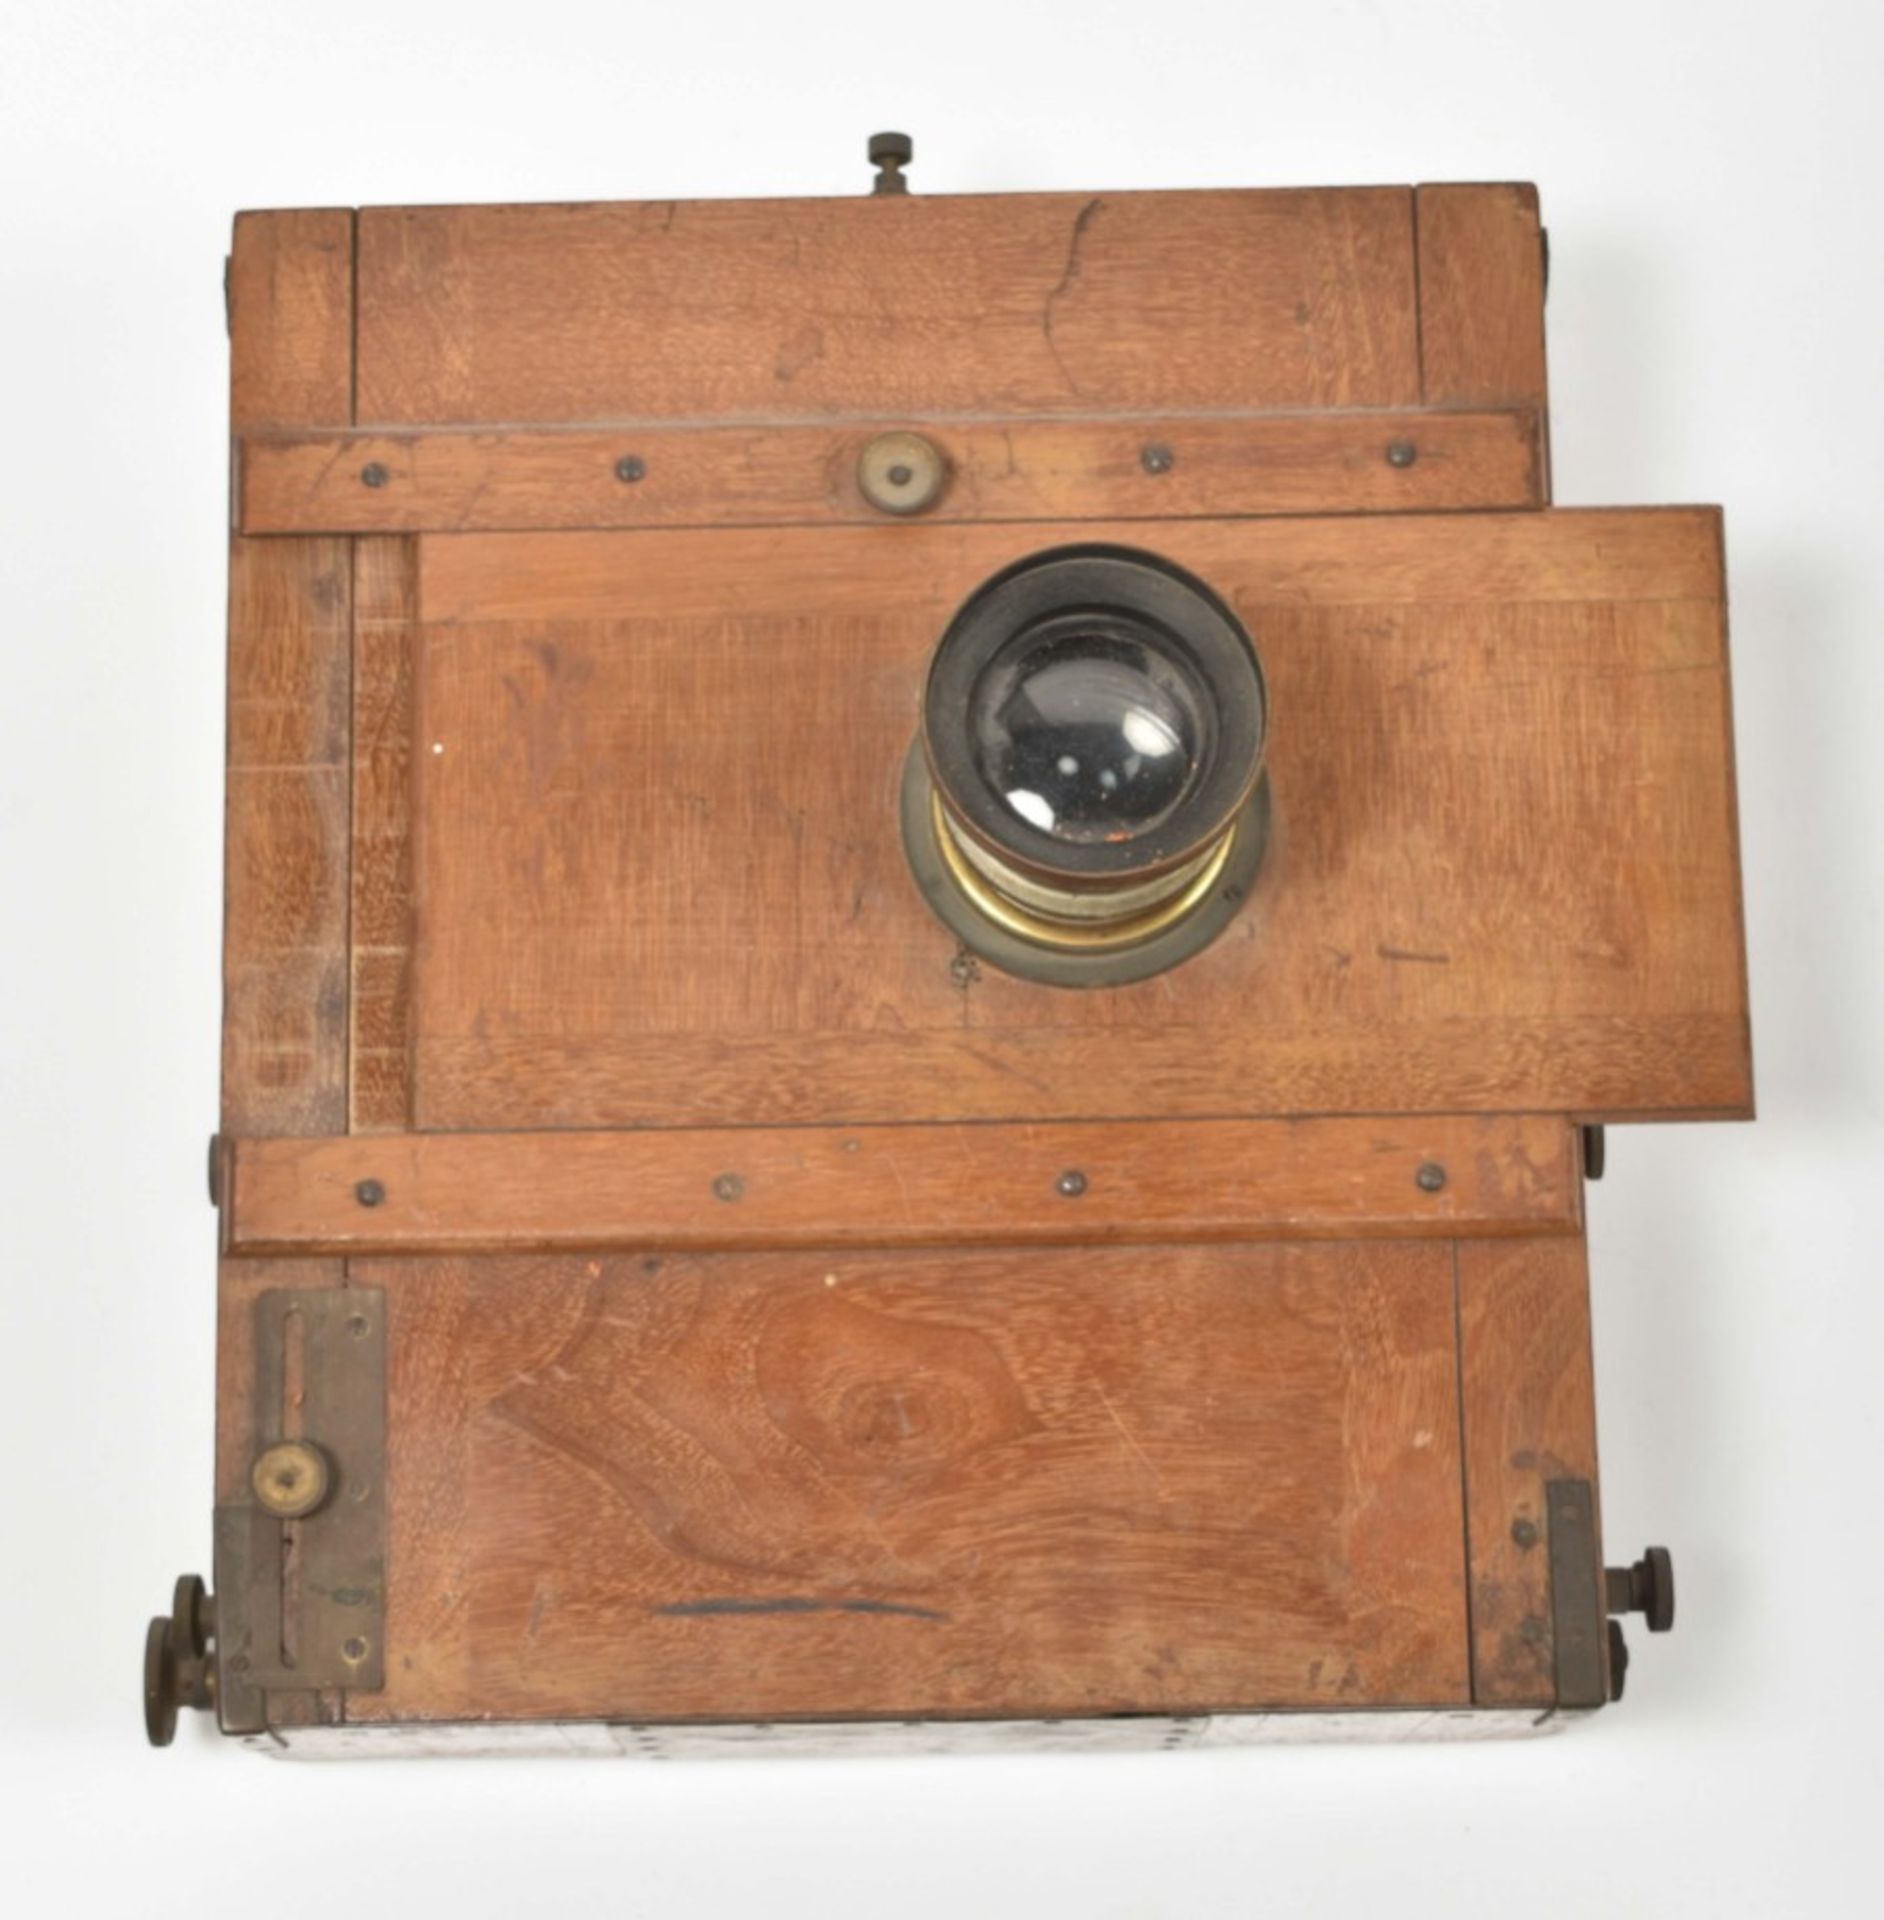 [Magic lantern] Early 20th century magic lantern and camera paraphernalia - Image 7 of 7